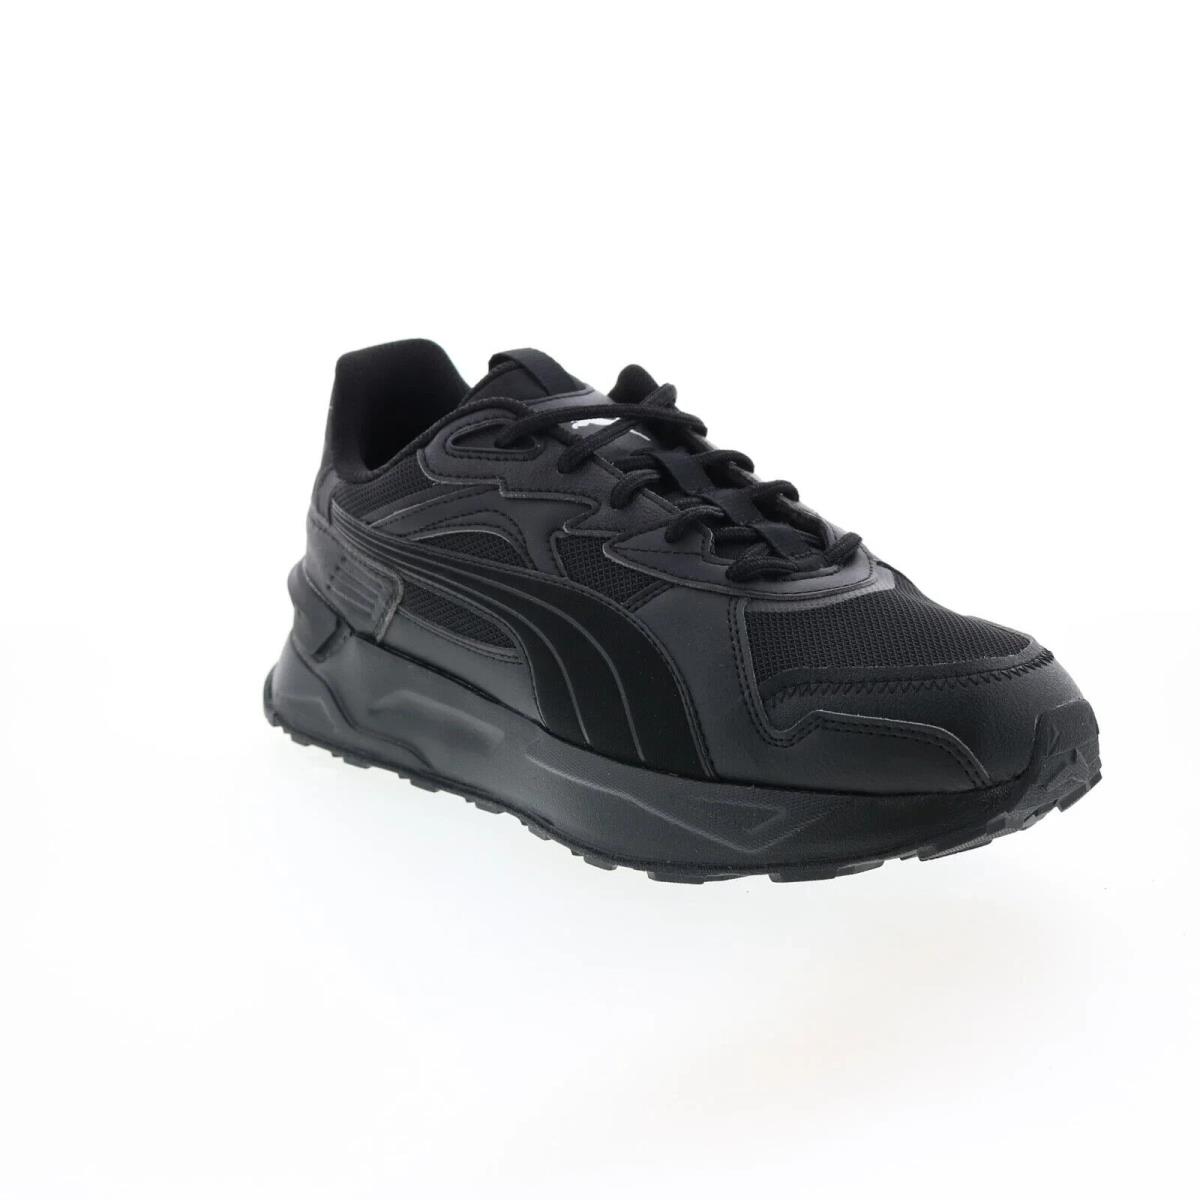 Puma N2124 Mens Black Mirage Sport Asphalt Lace Up Sneakers Size EU42.5 US 9.5